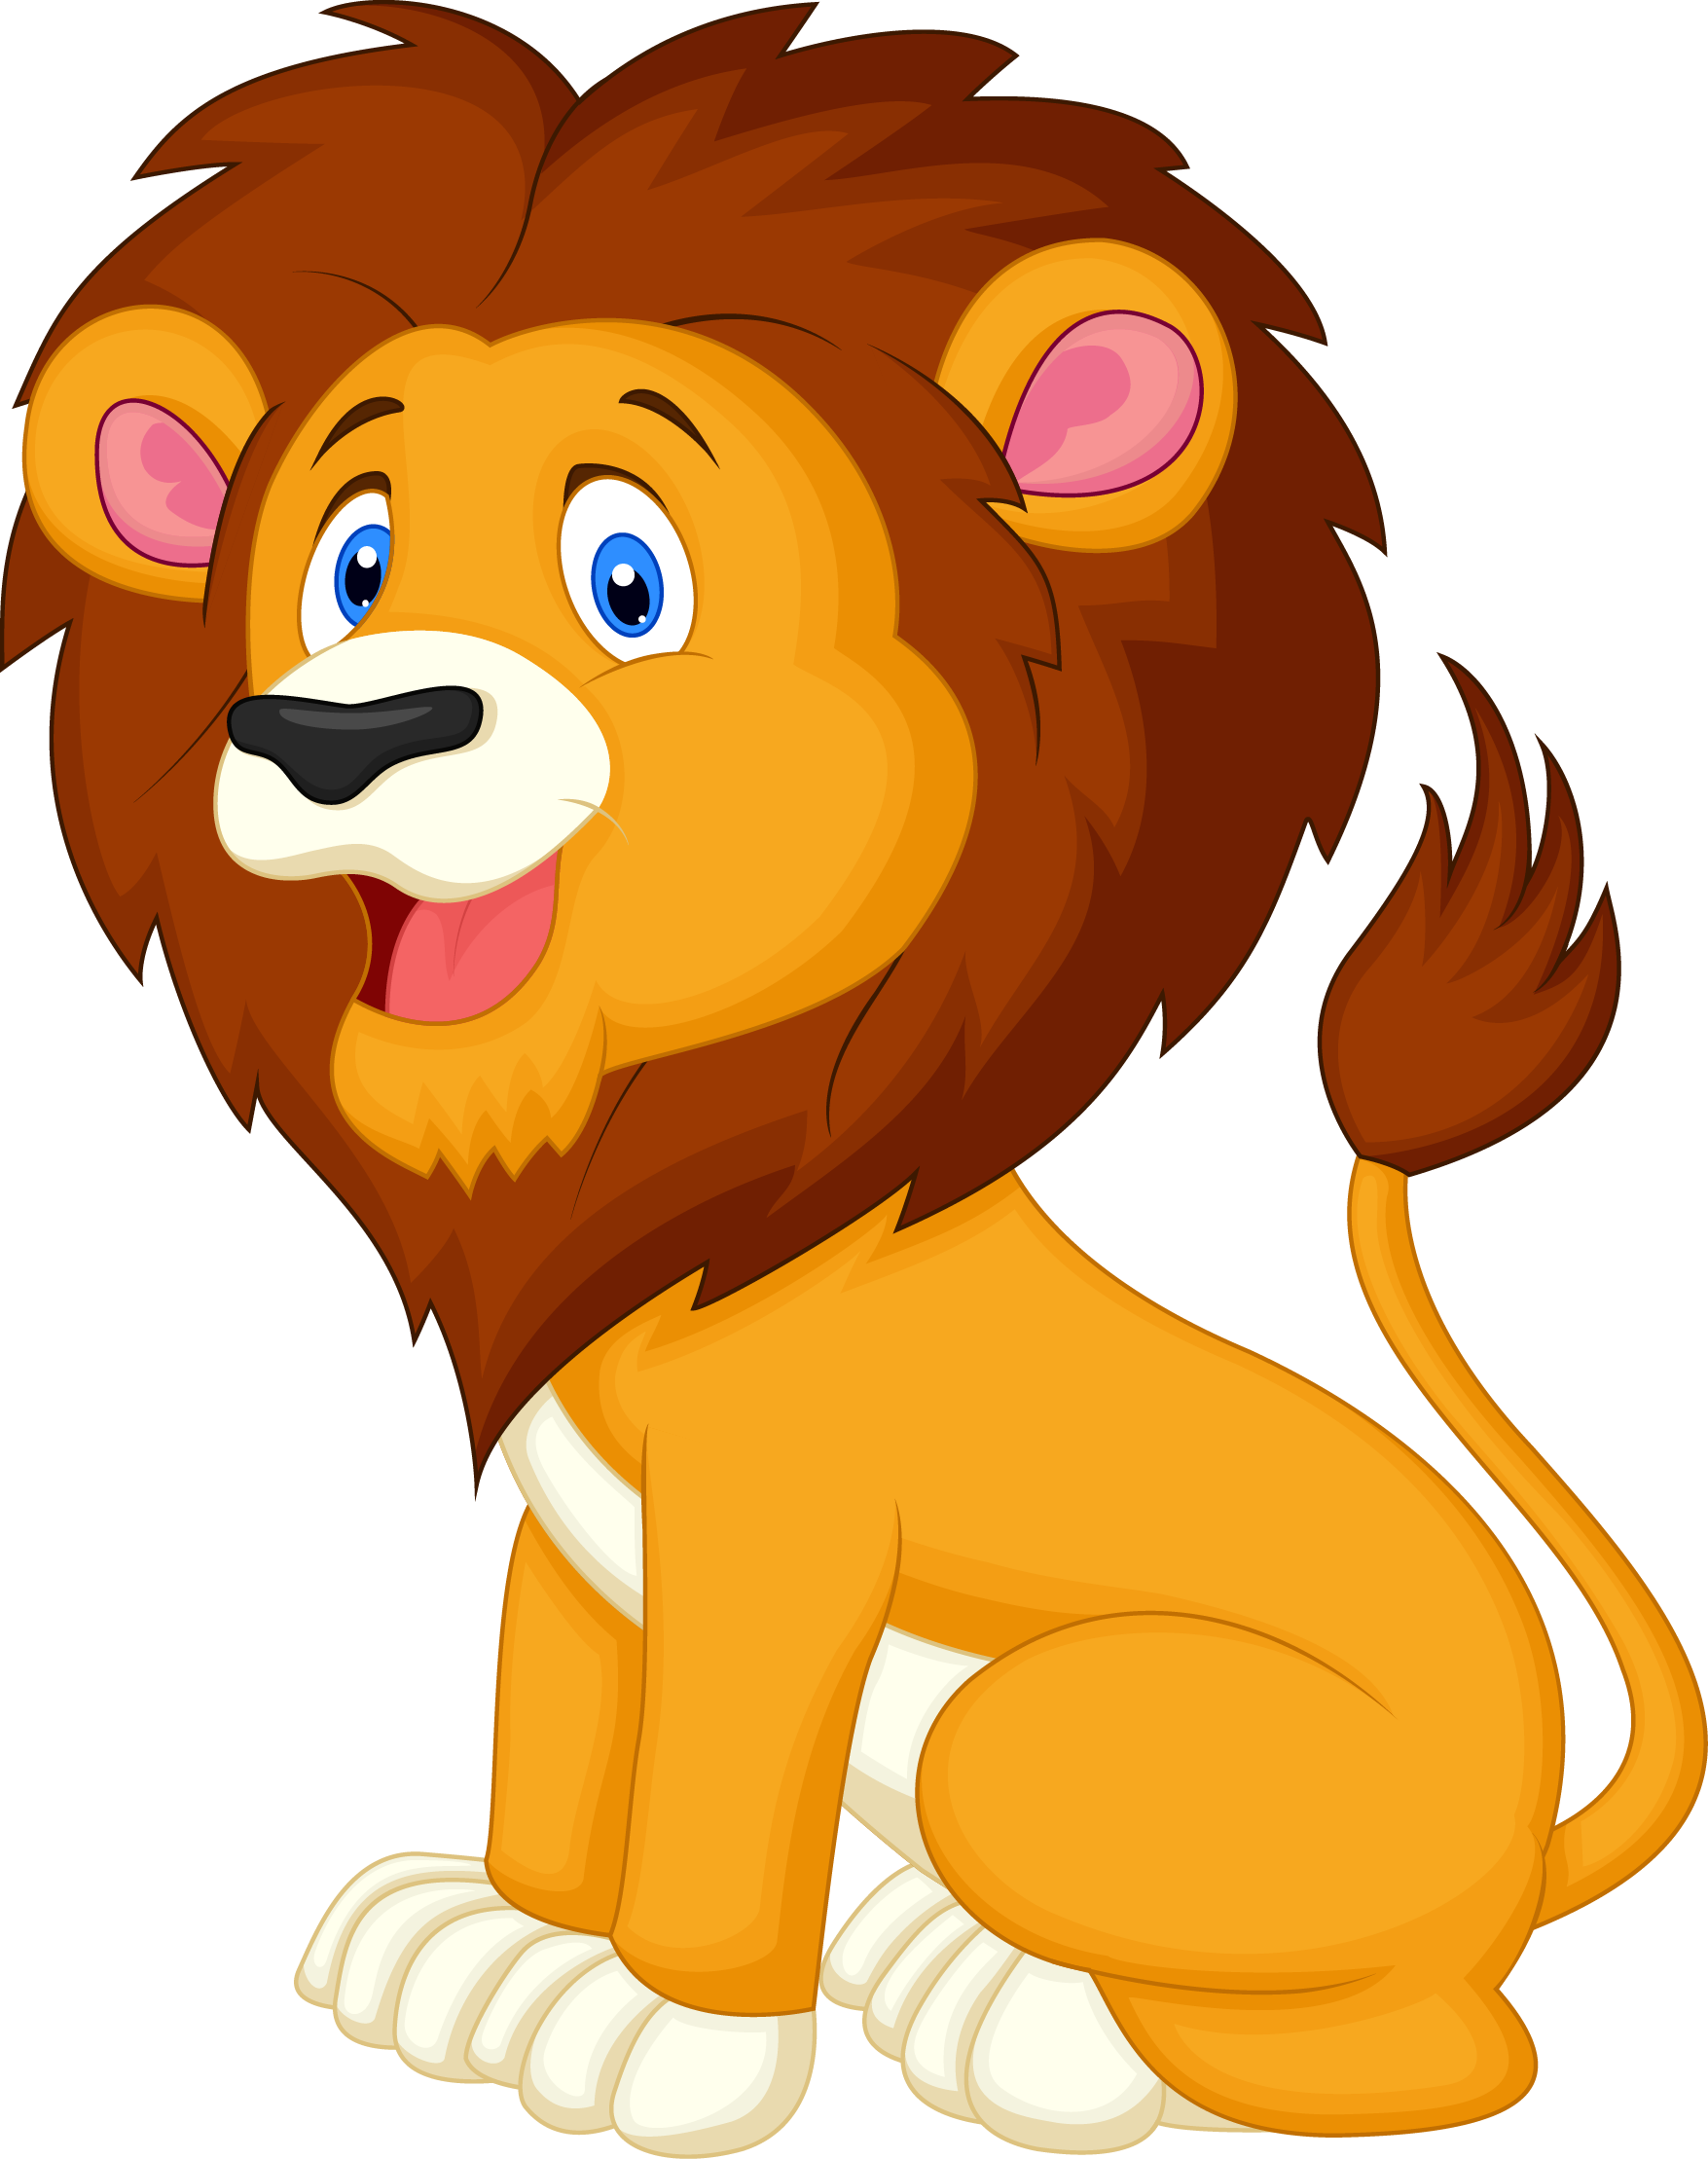 Lion clipart emoji. Pin by karen miranda